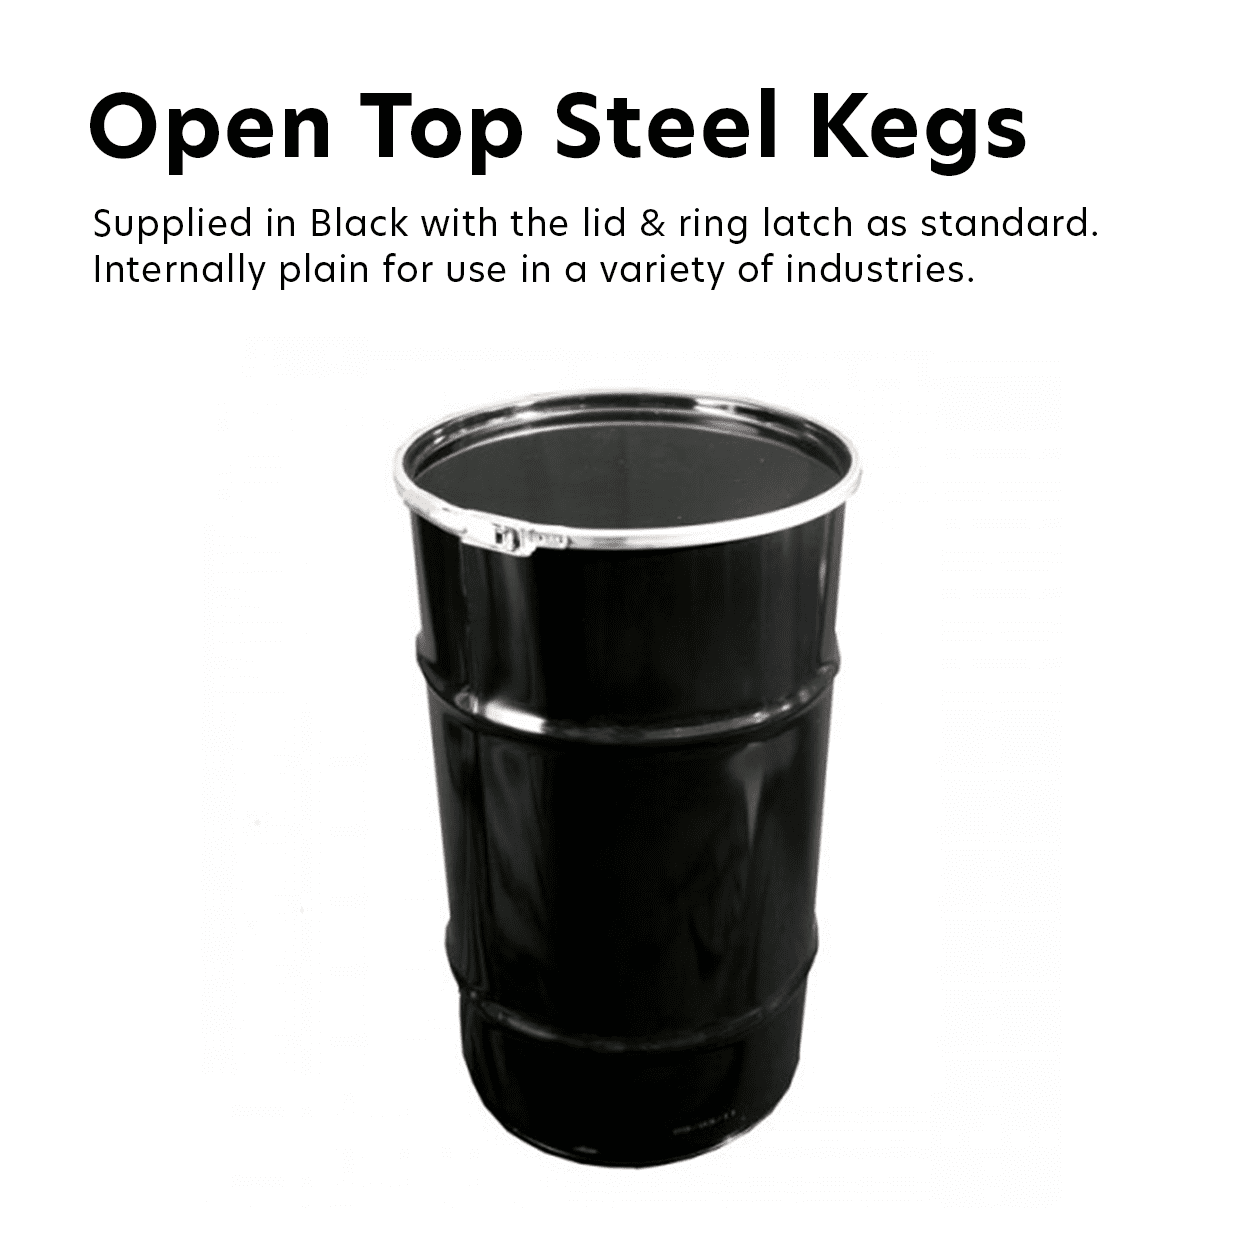 Open Top Steel Kegs